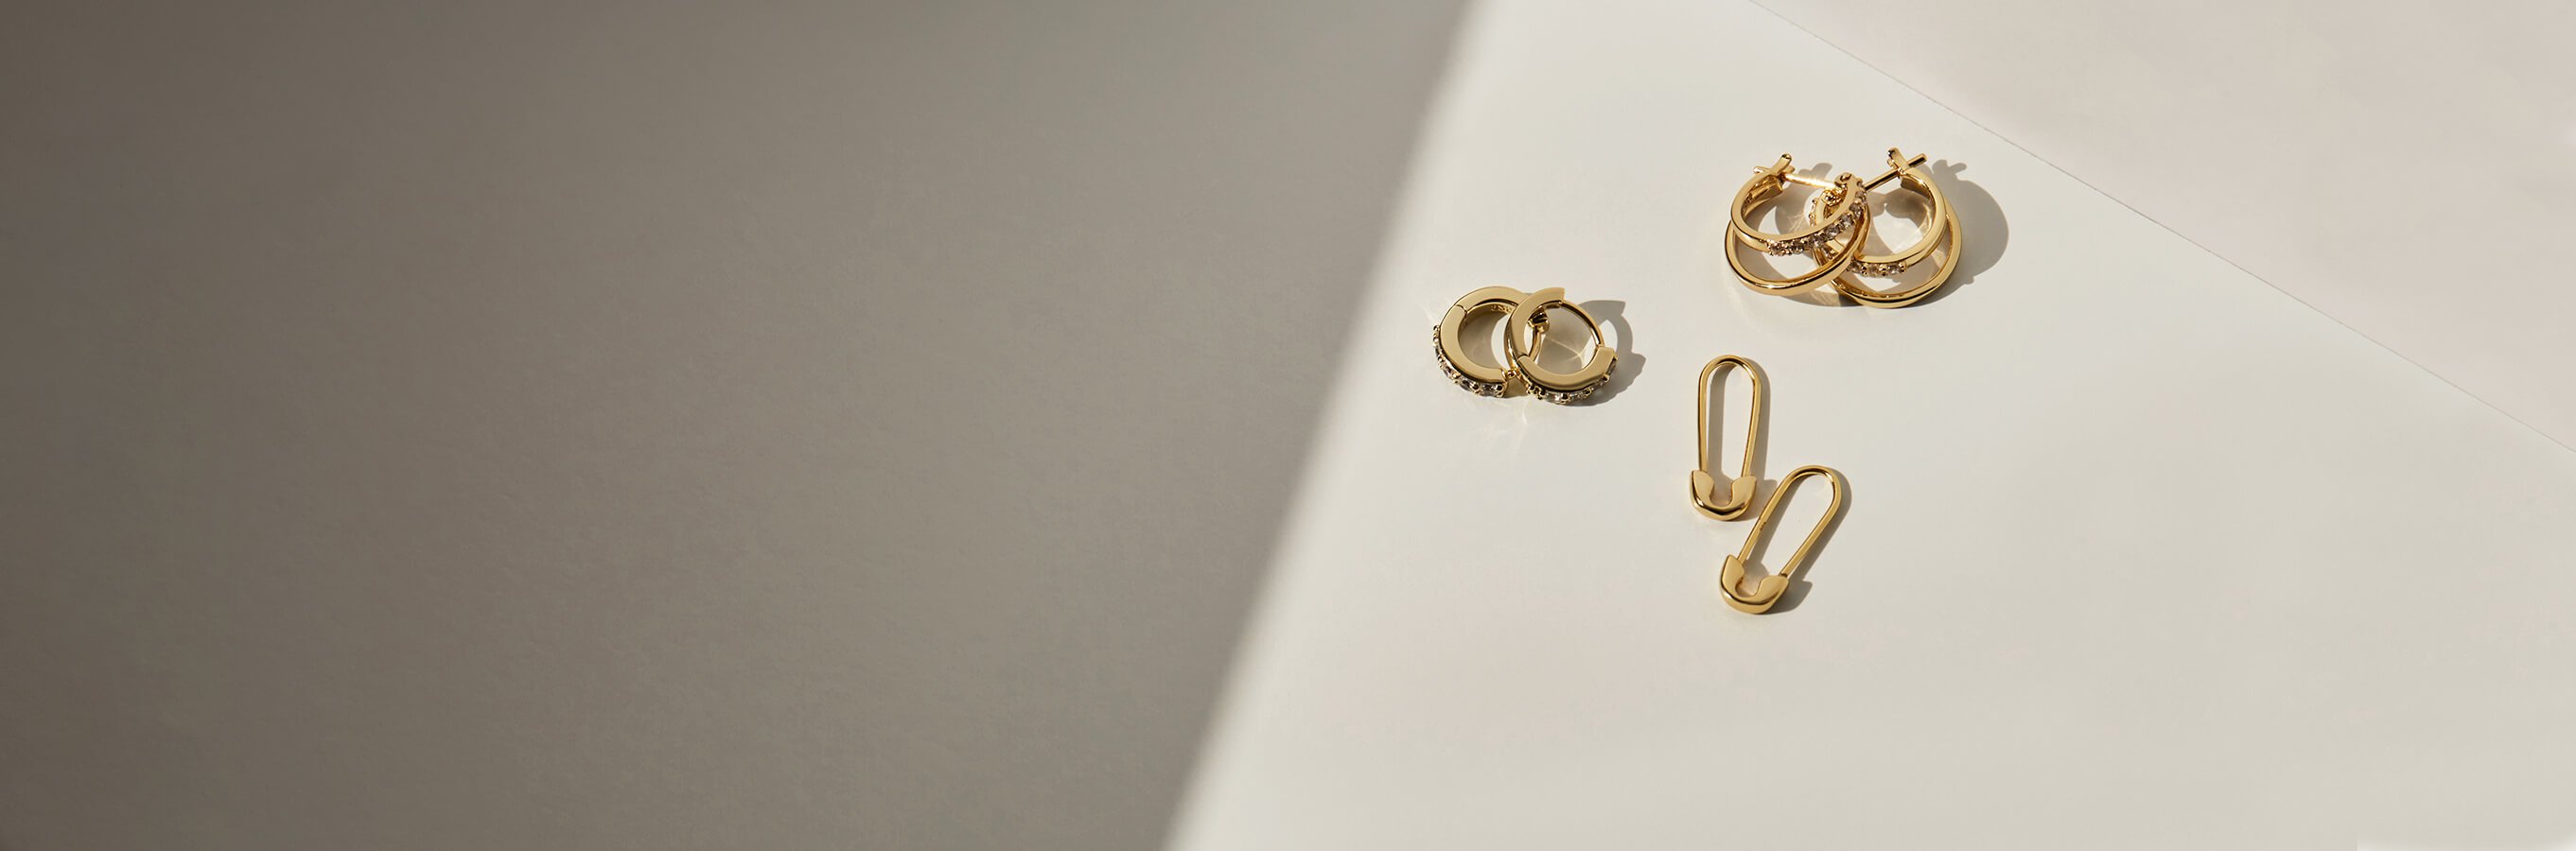 Ana Luisa Jewelry Under $89 Earrings Necklaces Bracelets Rings